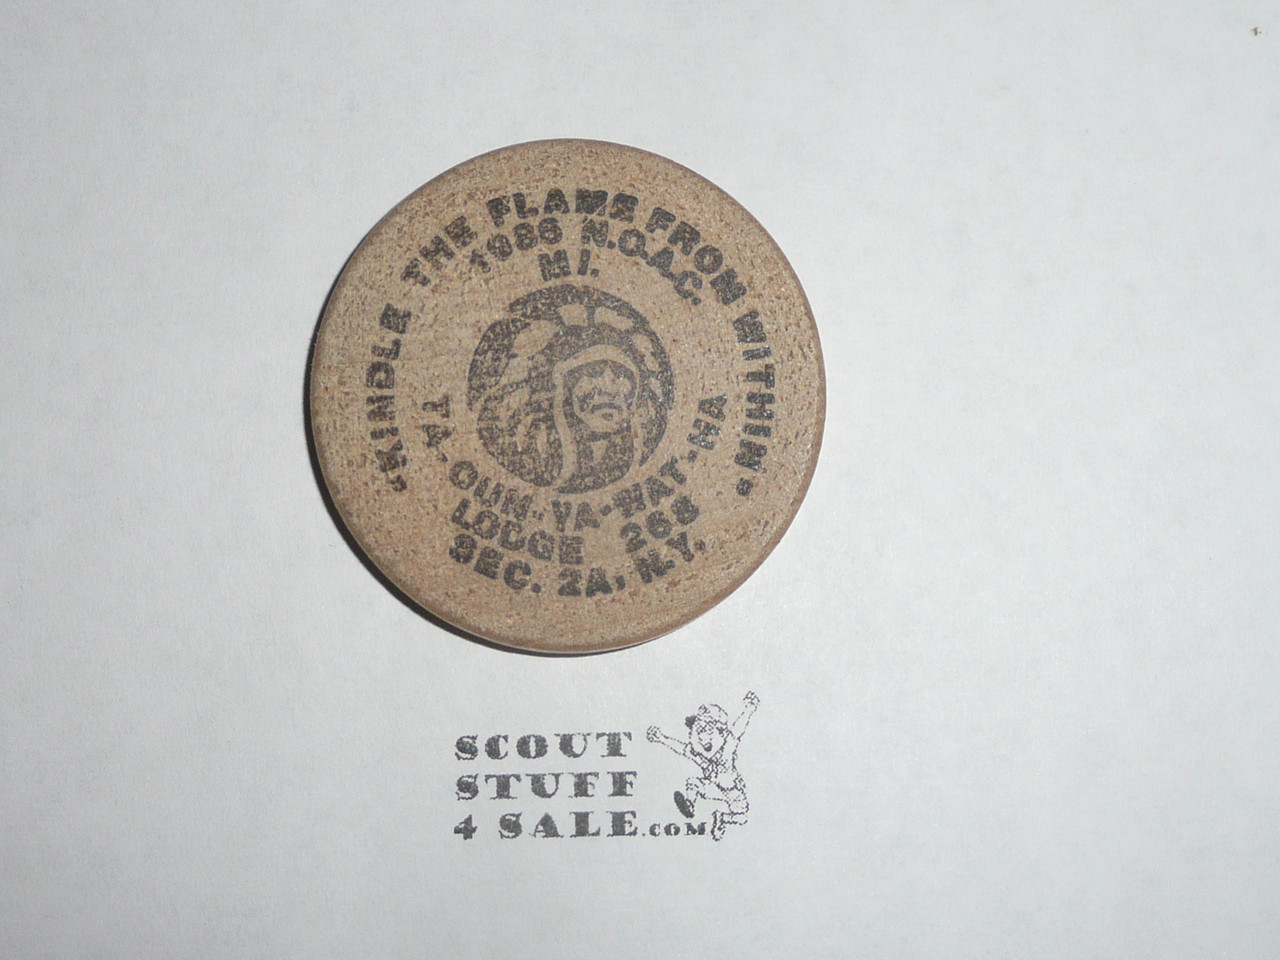 Ta-Oun-Ya-Wat-Ha O.A. Lodge #268 Wooden Nickel from 1986 NOAC